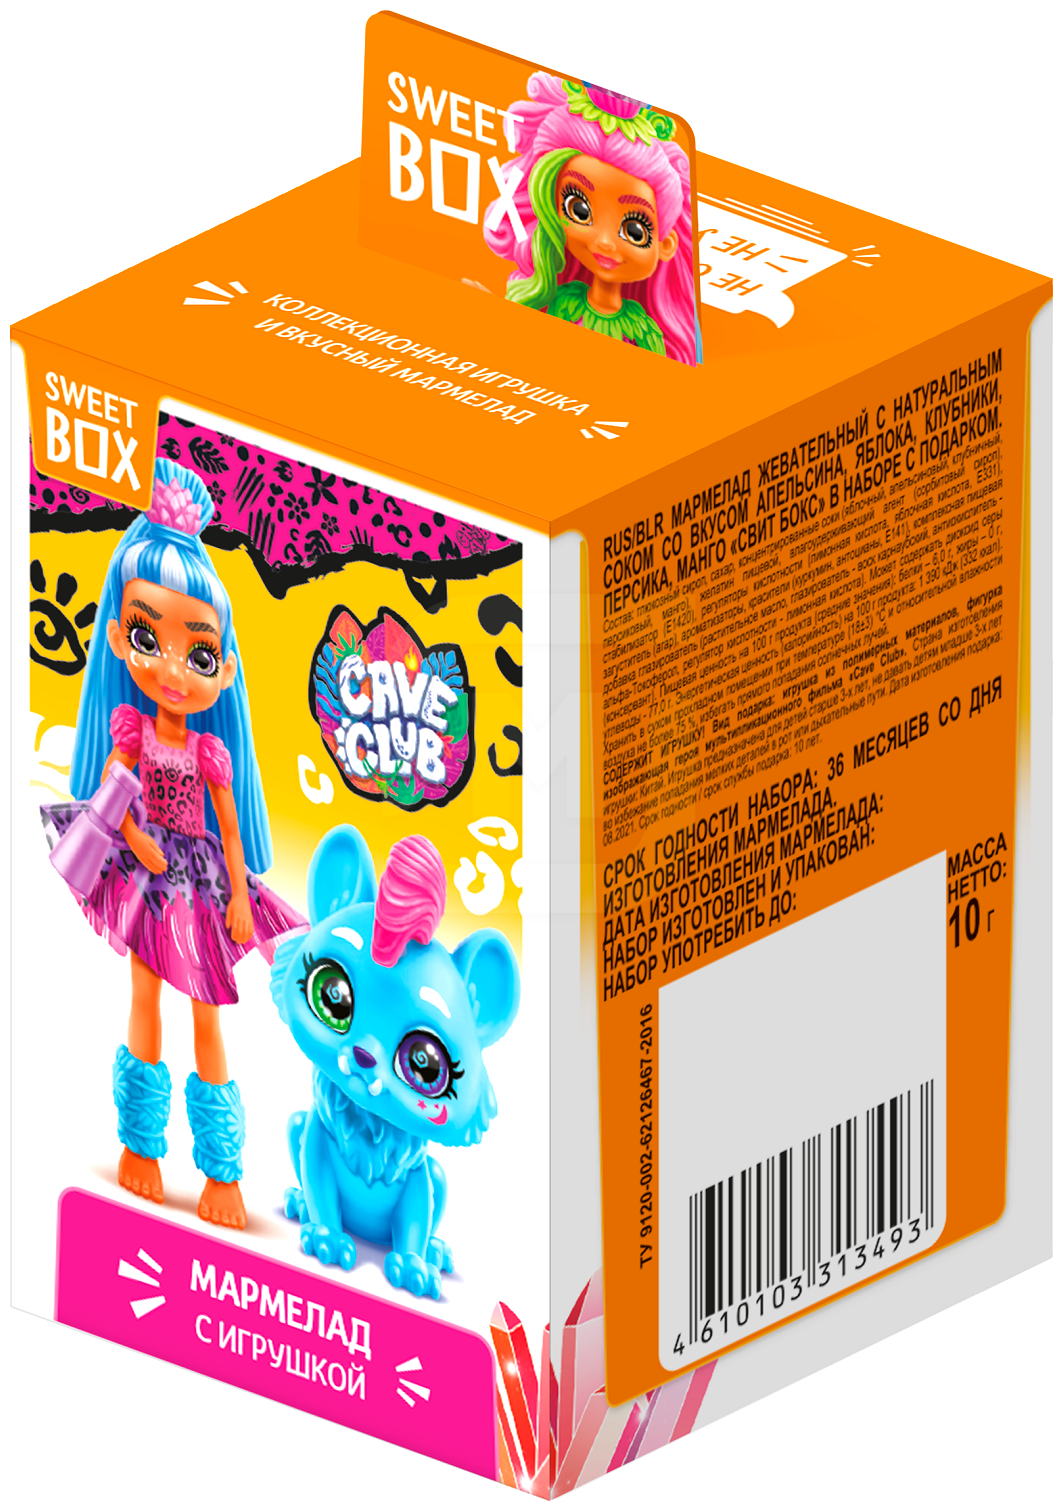 SWEET BOX CAVE CLUB Мармелад с игрушкой в коробочке, 10г. - фотография № 1